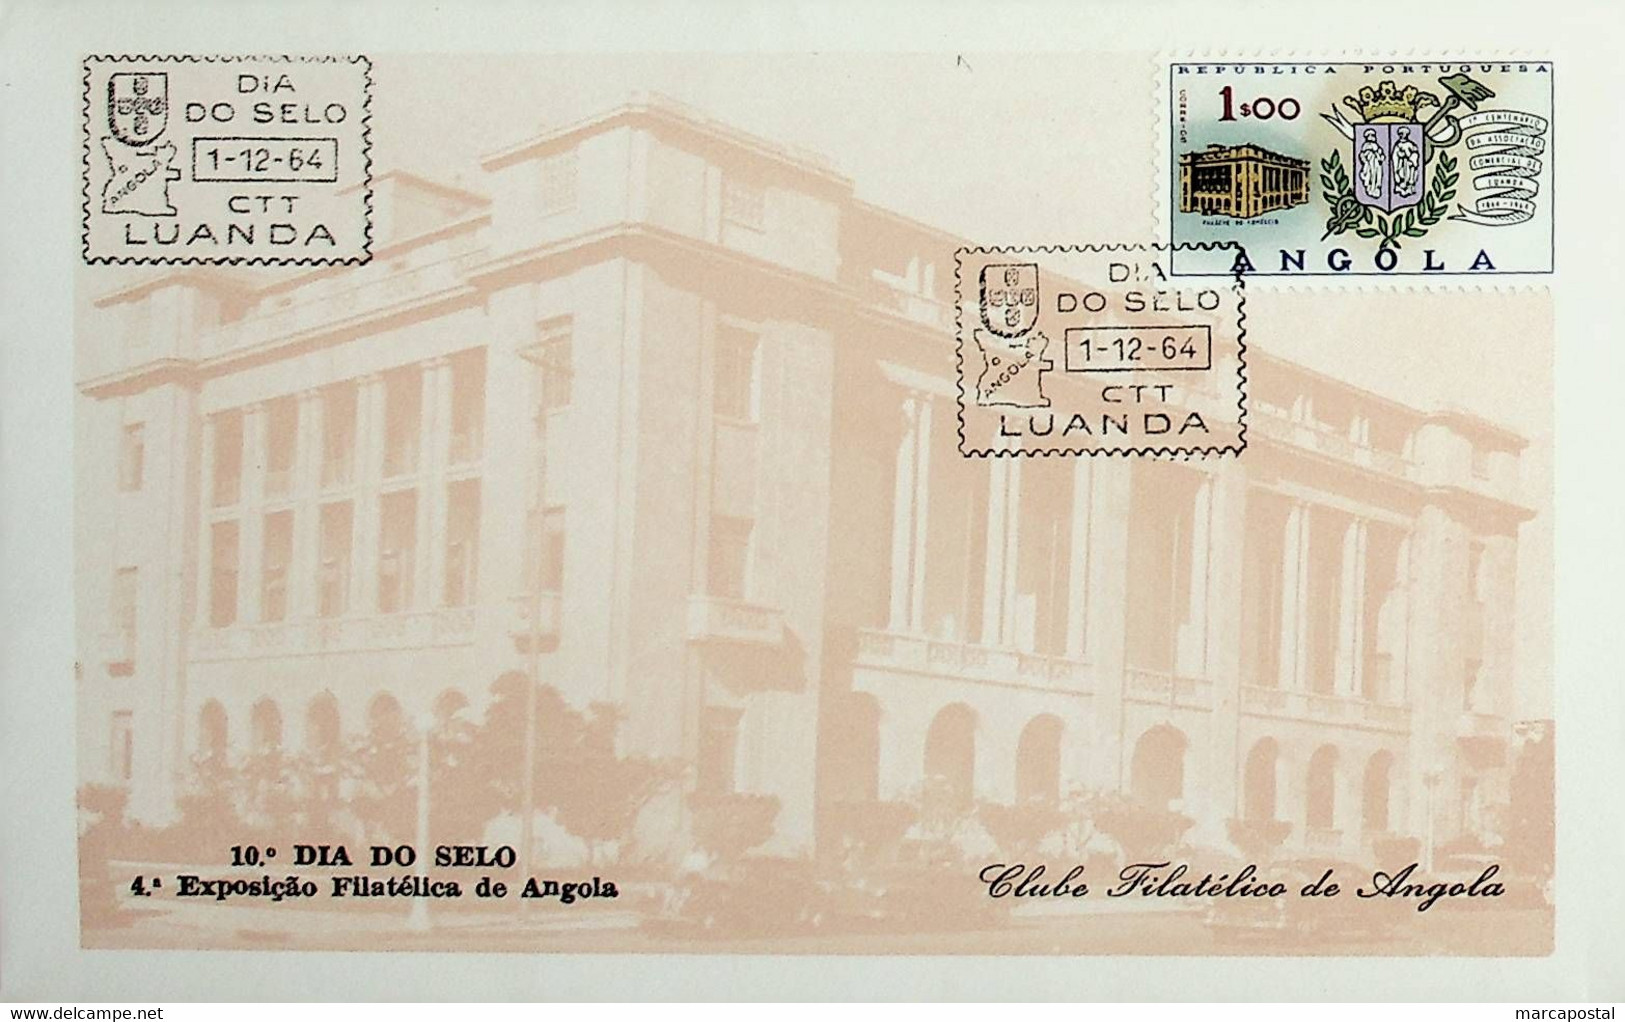 1964 Angola Dia Do Selo / Stamp Day - Journée Du Timbre